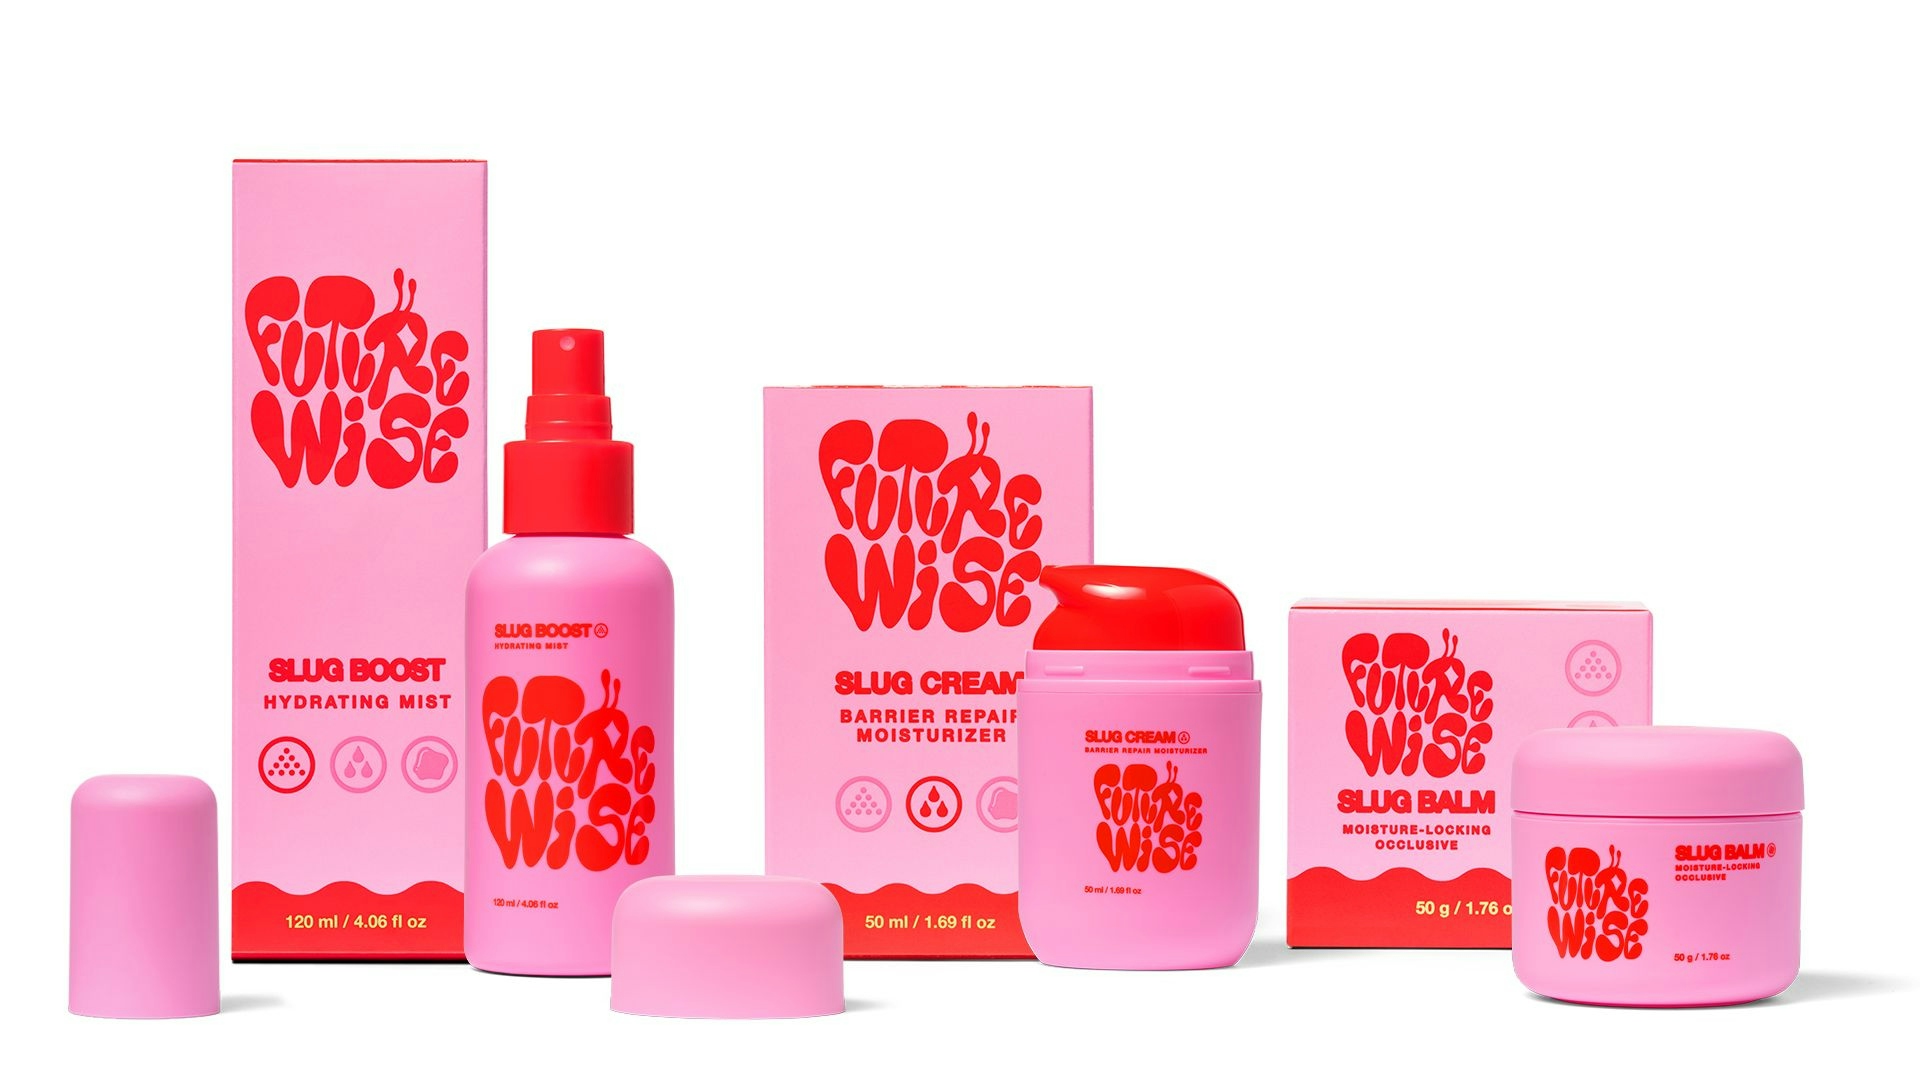 Futurewise packaging range for Slug Boost, Slug Cream, and Slug Balm products